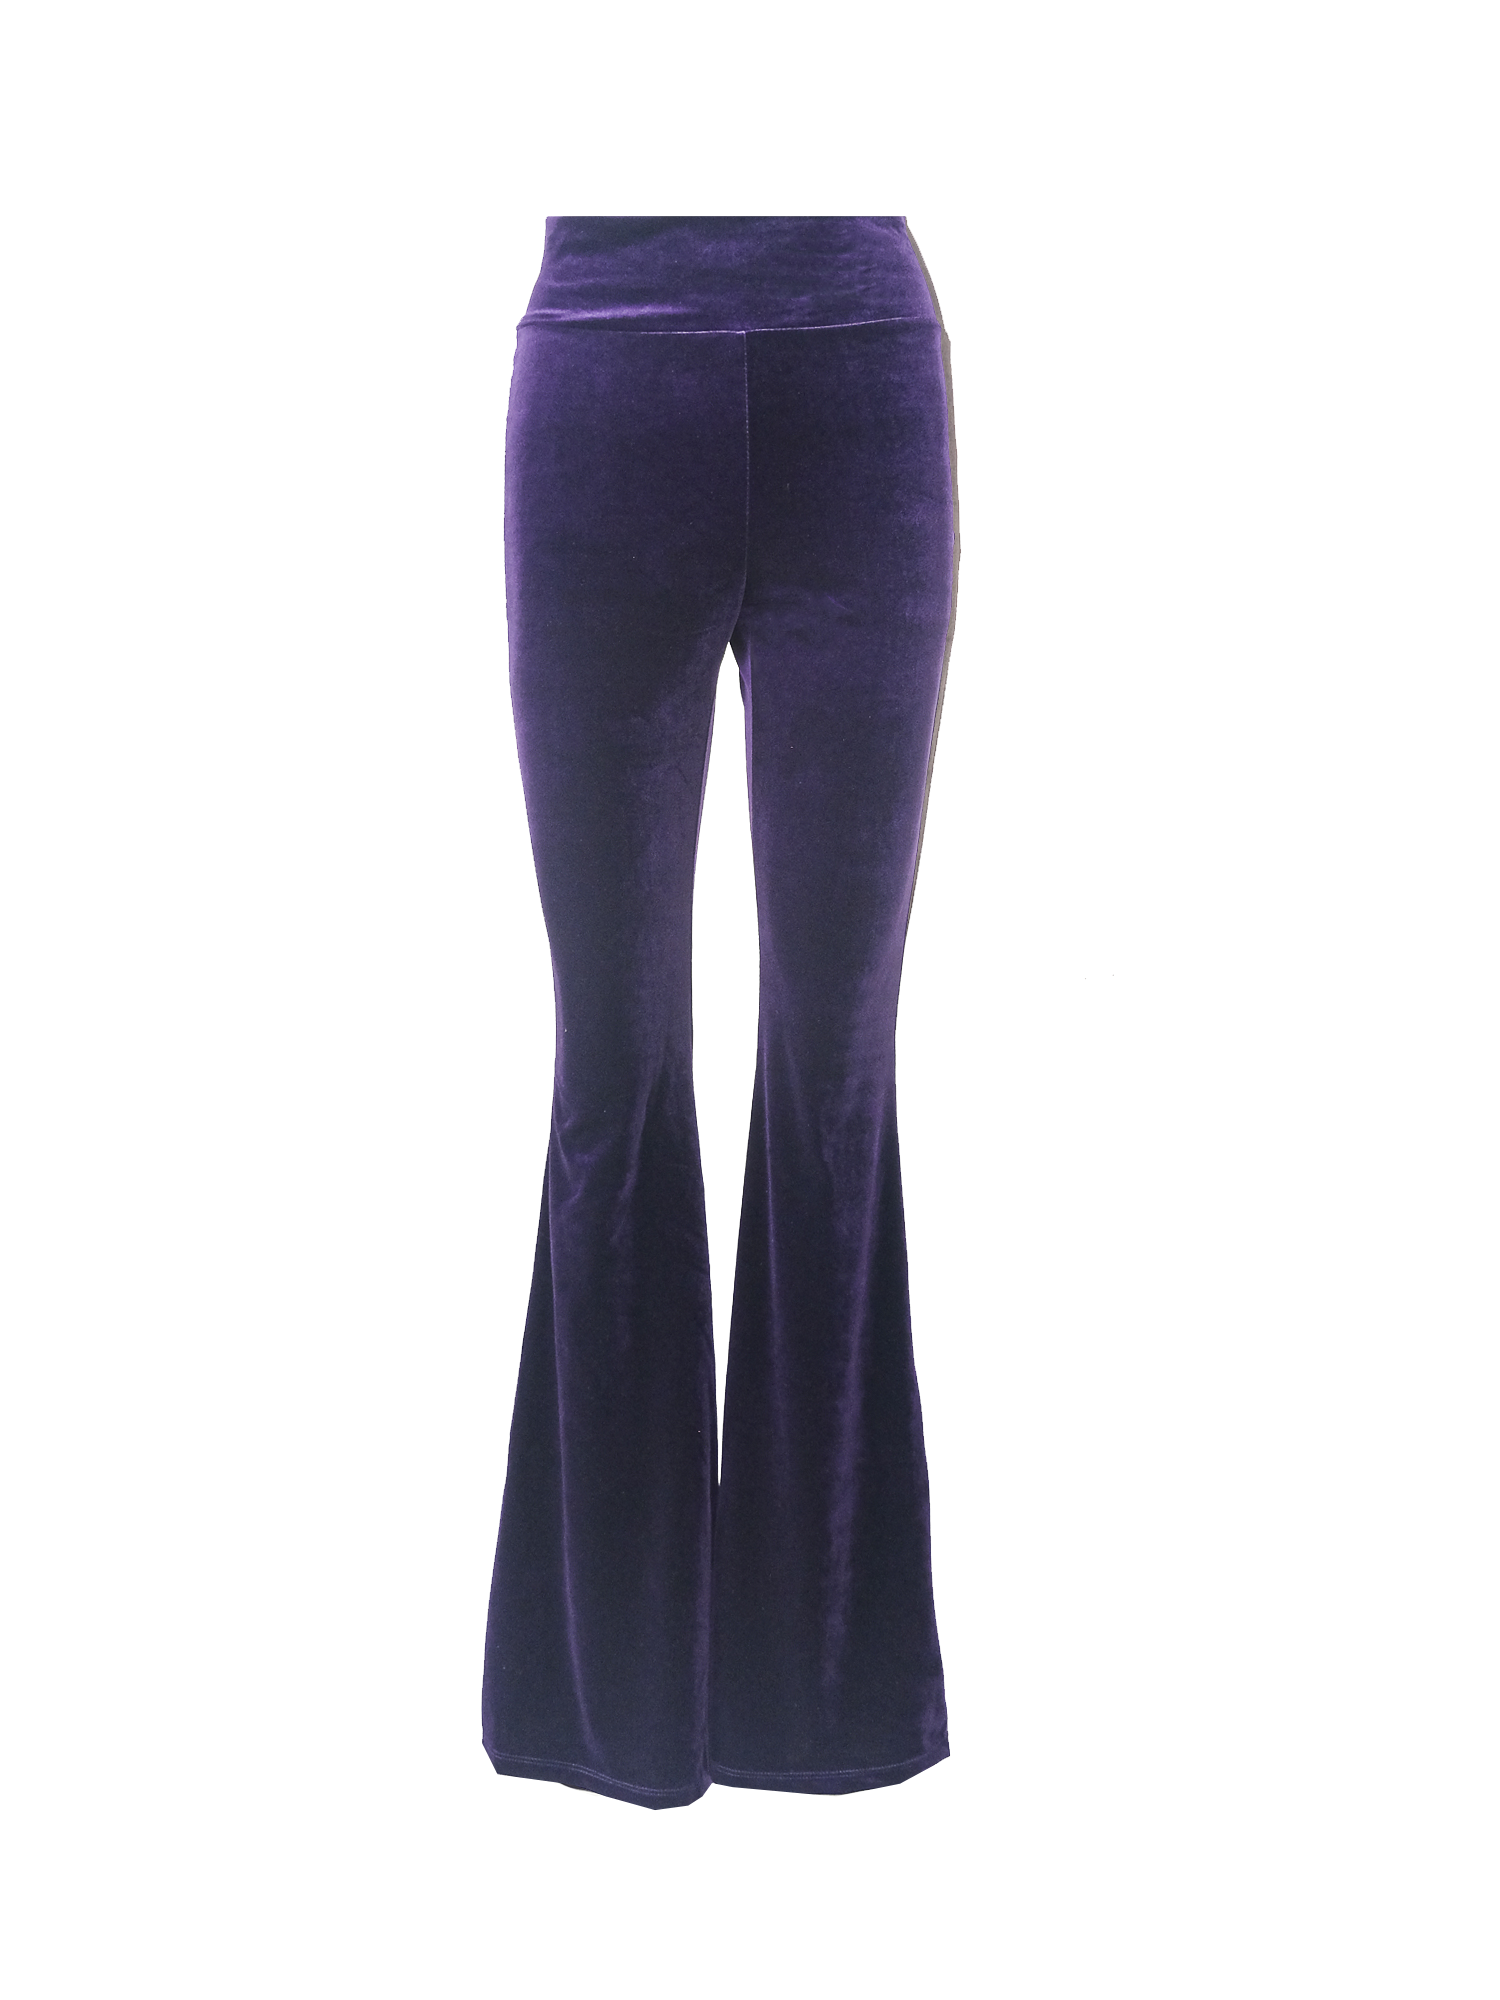 LOLA - flared pants in purple chenille